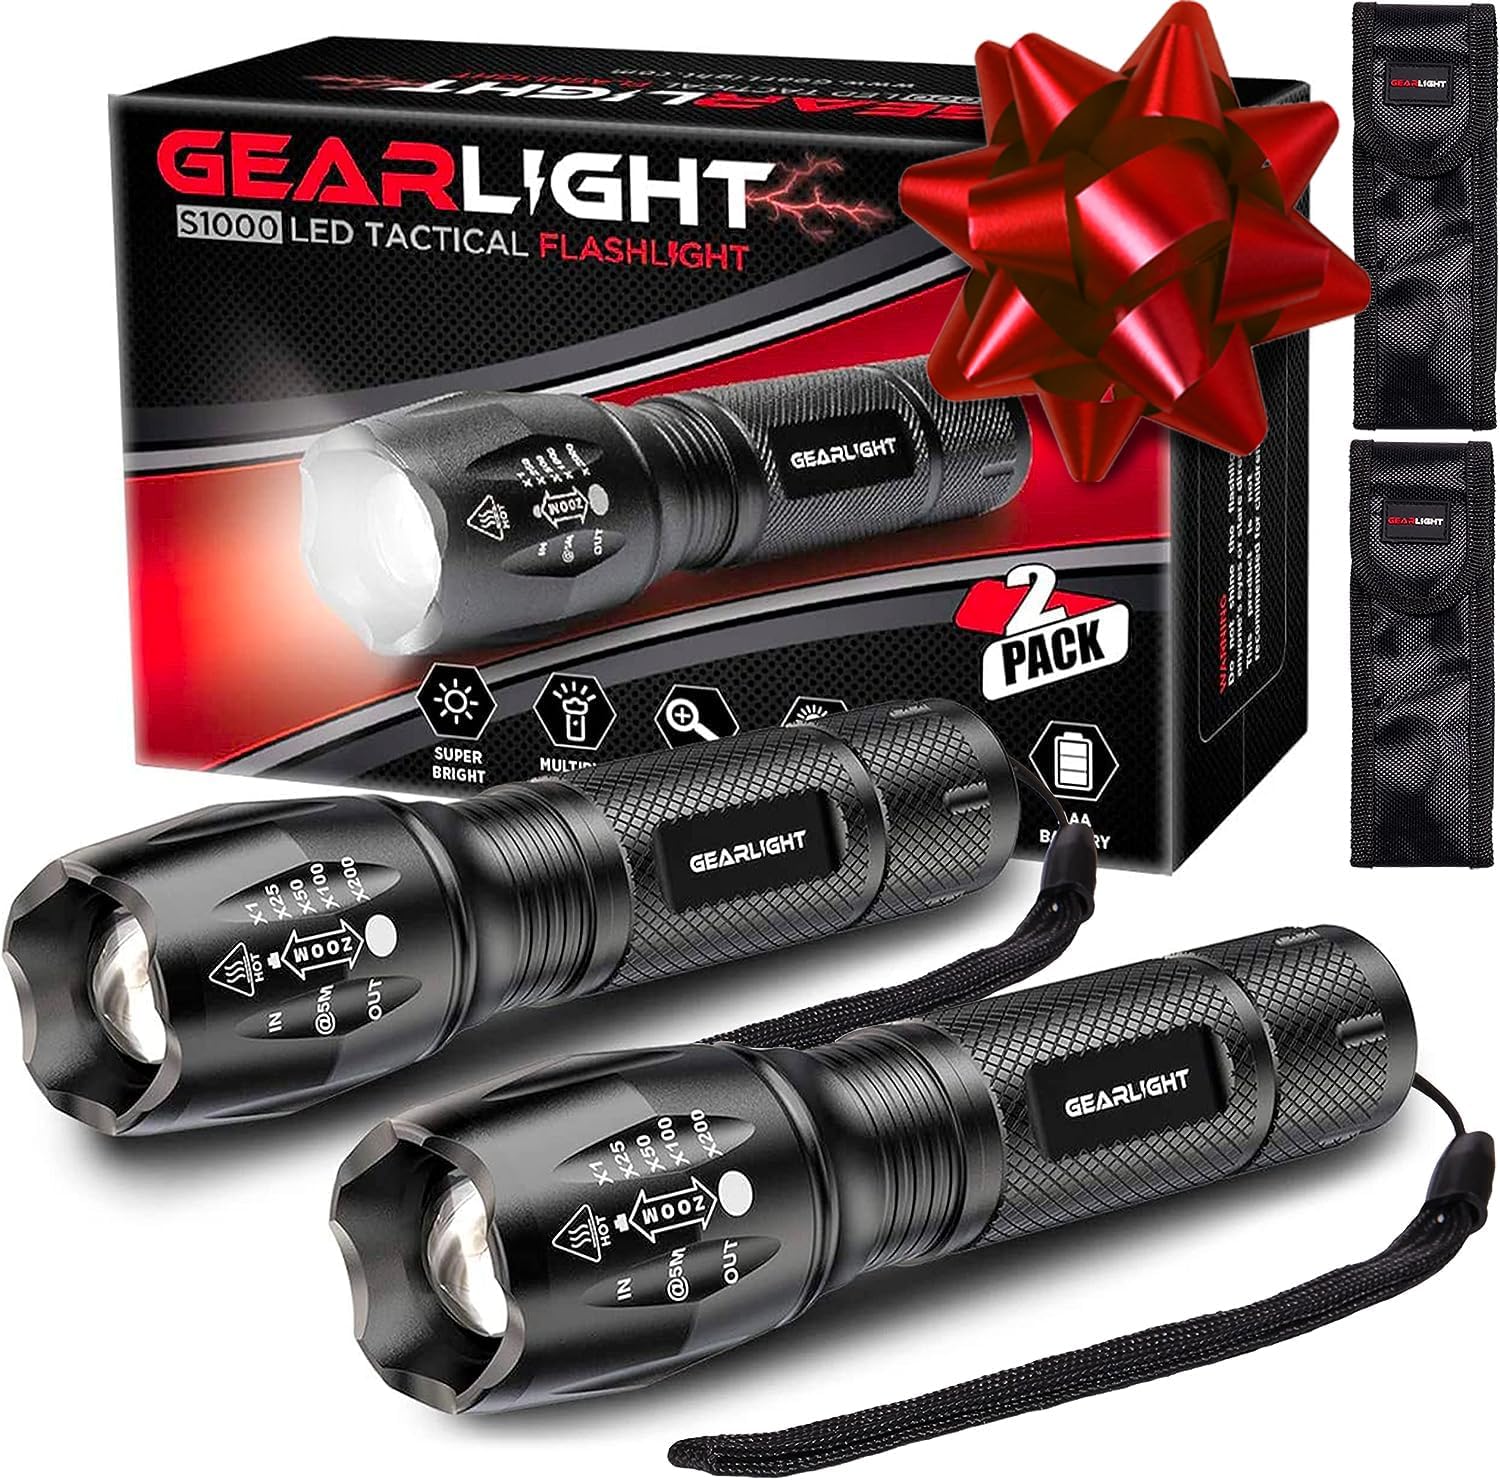 GearLight 2pack S1000 LED Flashlights High Lumens